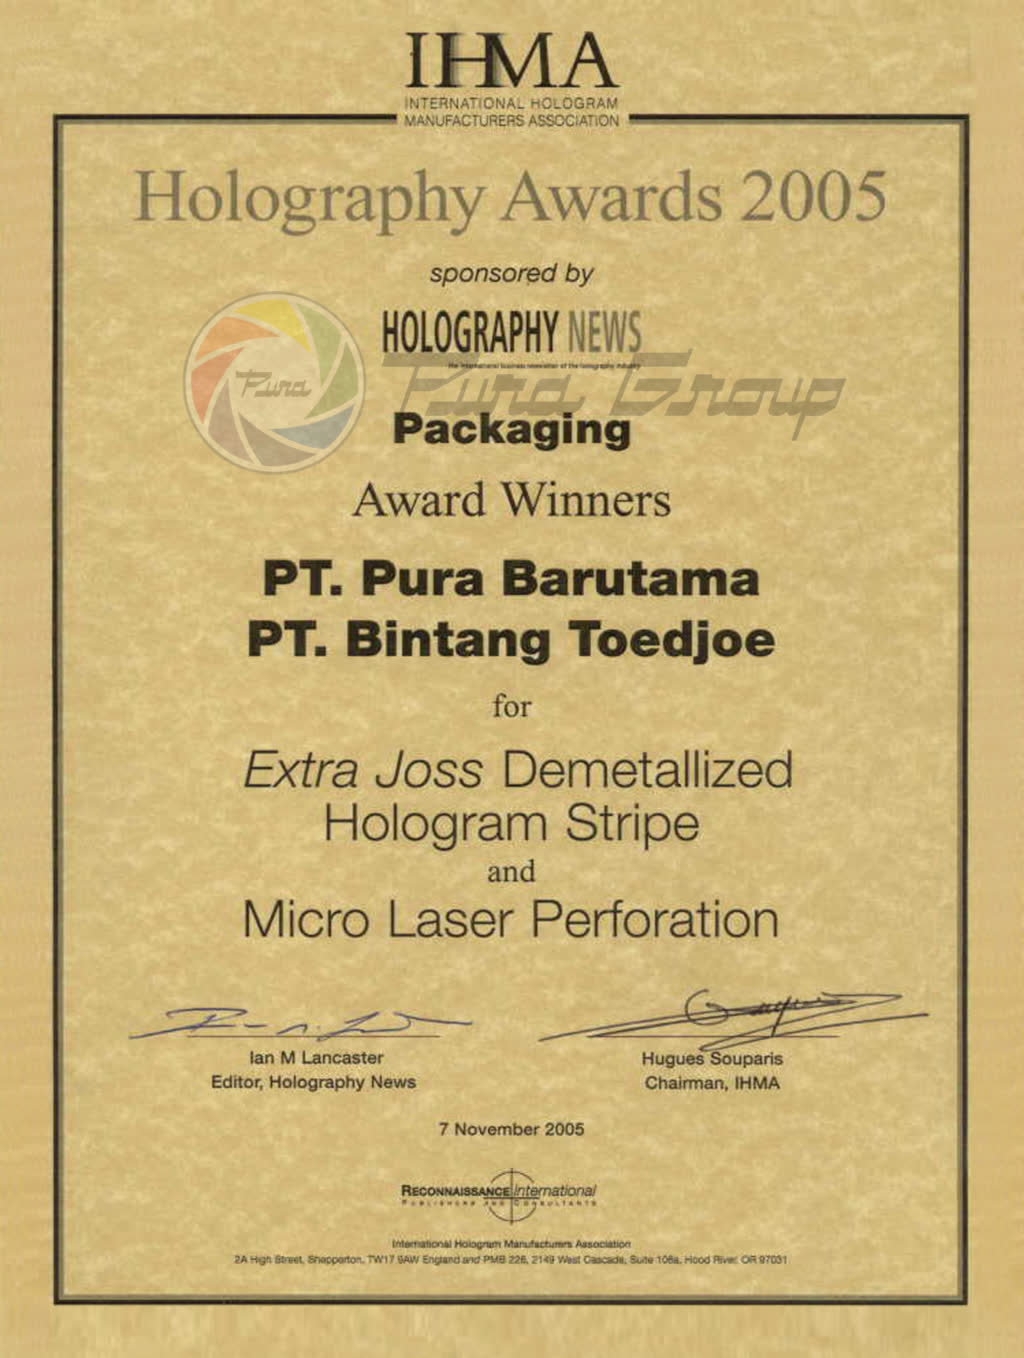 IHMA AWARDS 2005 FOR HOLOGRAM PACKAGING